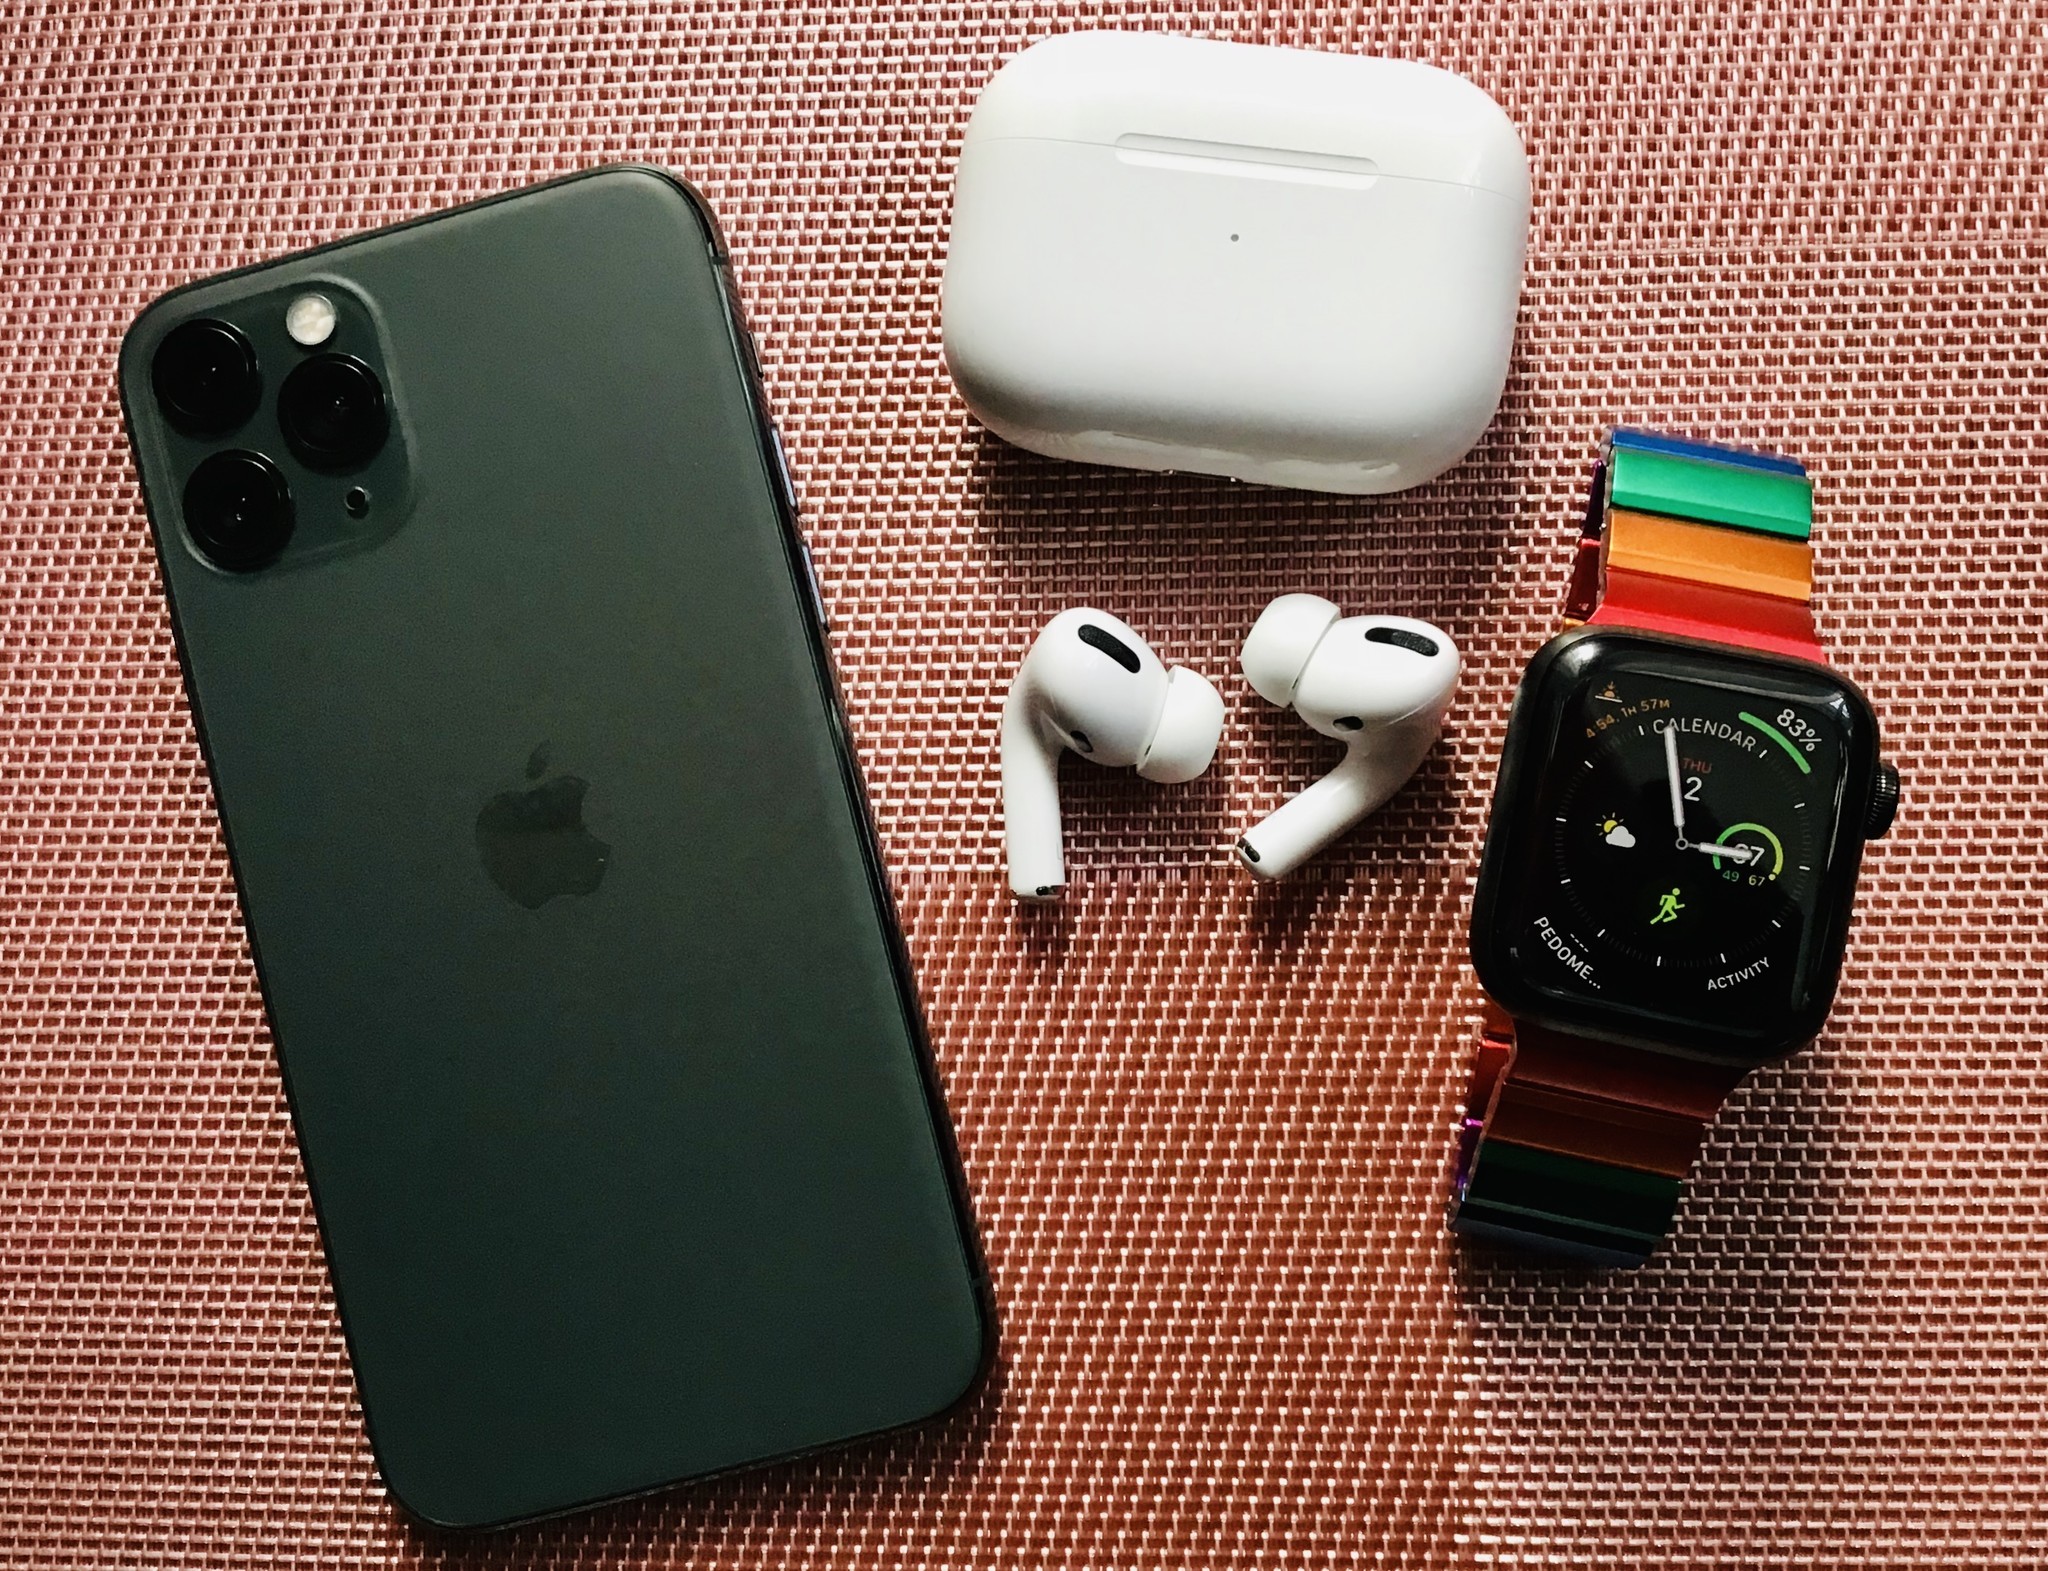 iphone-11-midnight-green-airpods-pro-apple-watch-5-edition-hero-02.jpg